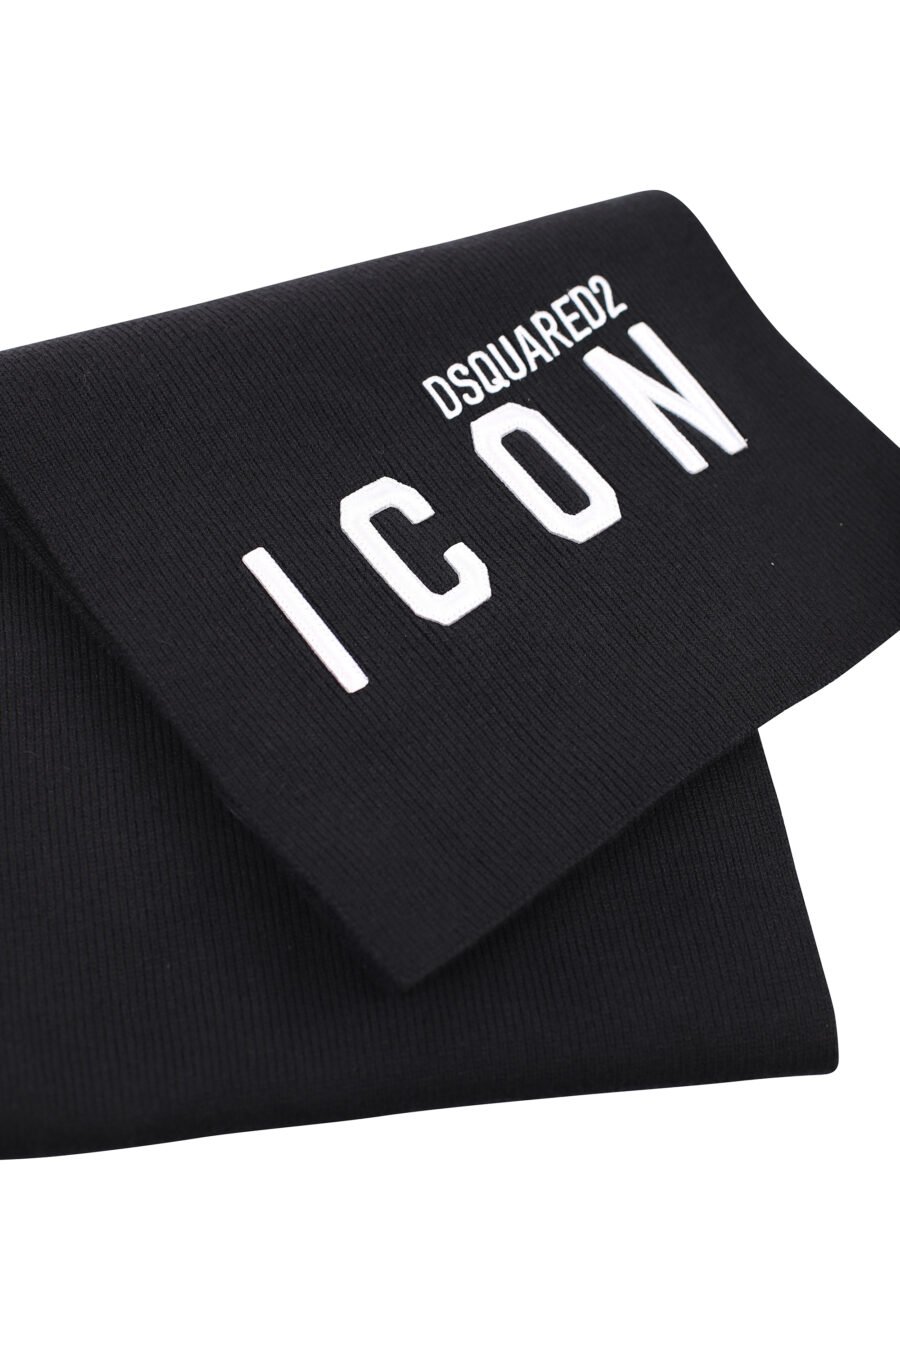 Bufanda negra con logo "icon" - IMG 1880